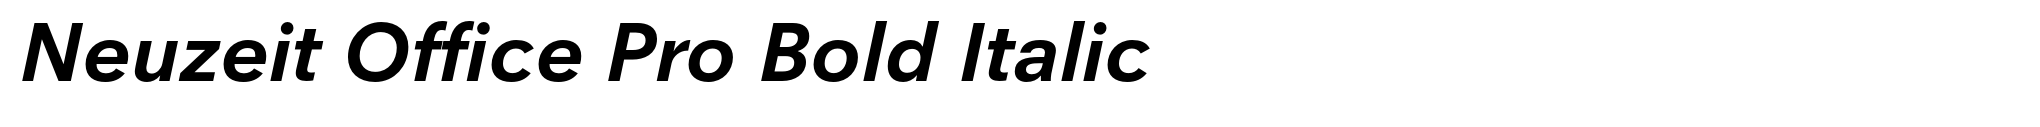 Neuzeit Office Pro Bold Italic image